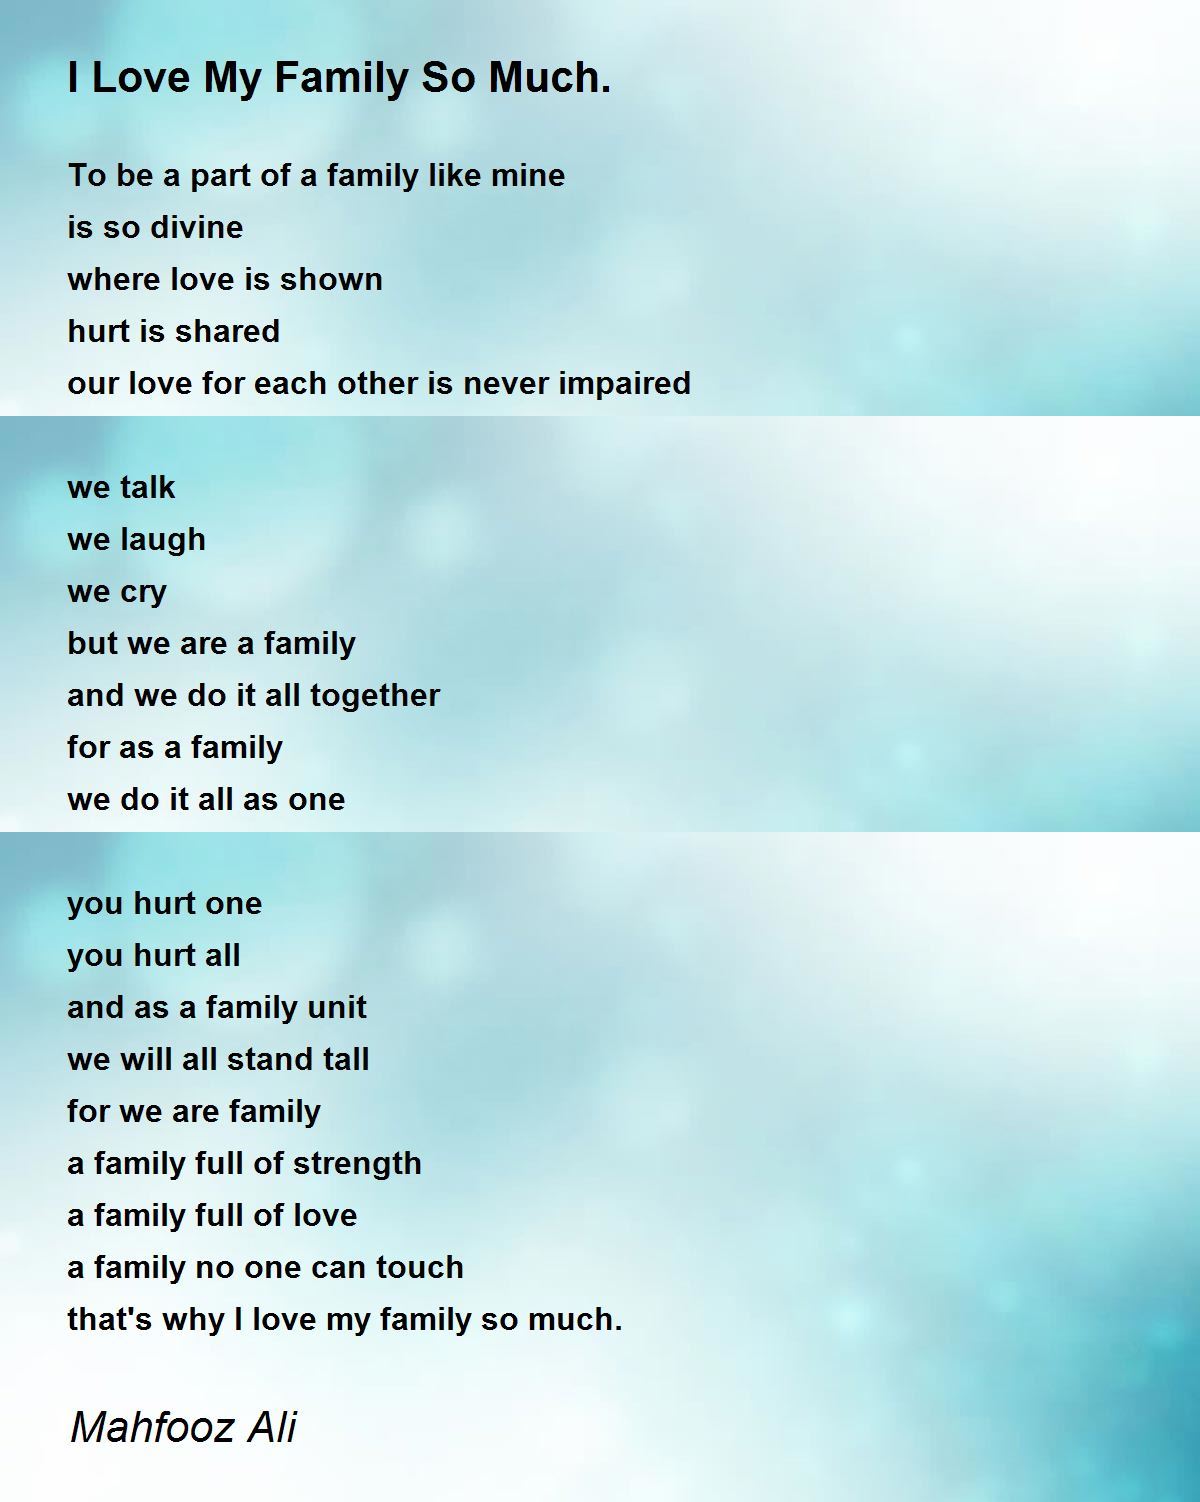 I Love My Family So Much. Poem by Mahfooz Ali - Poem ...